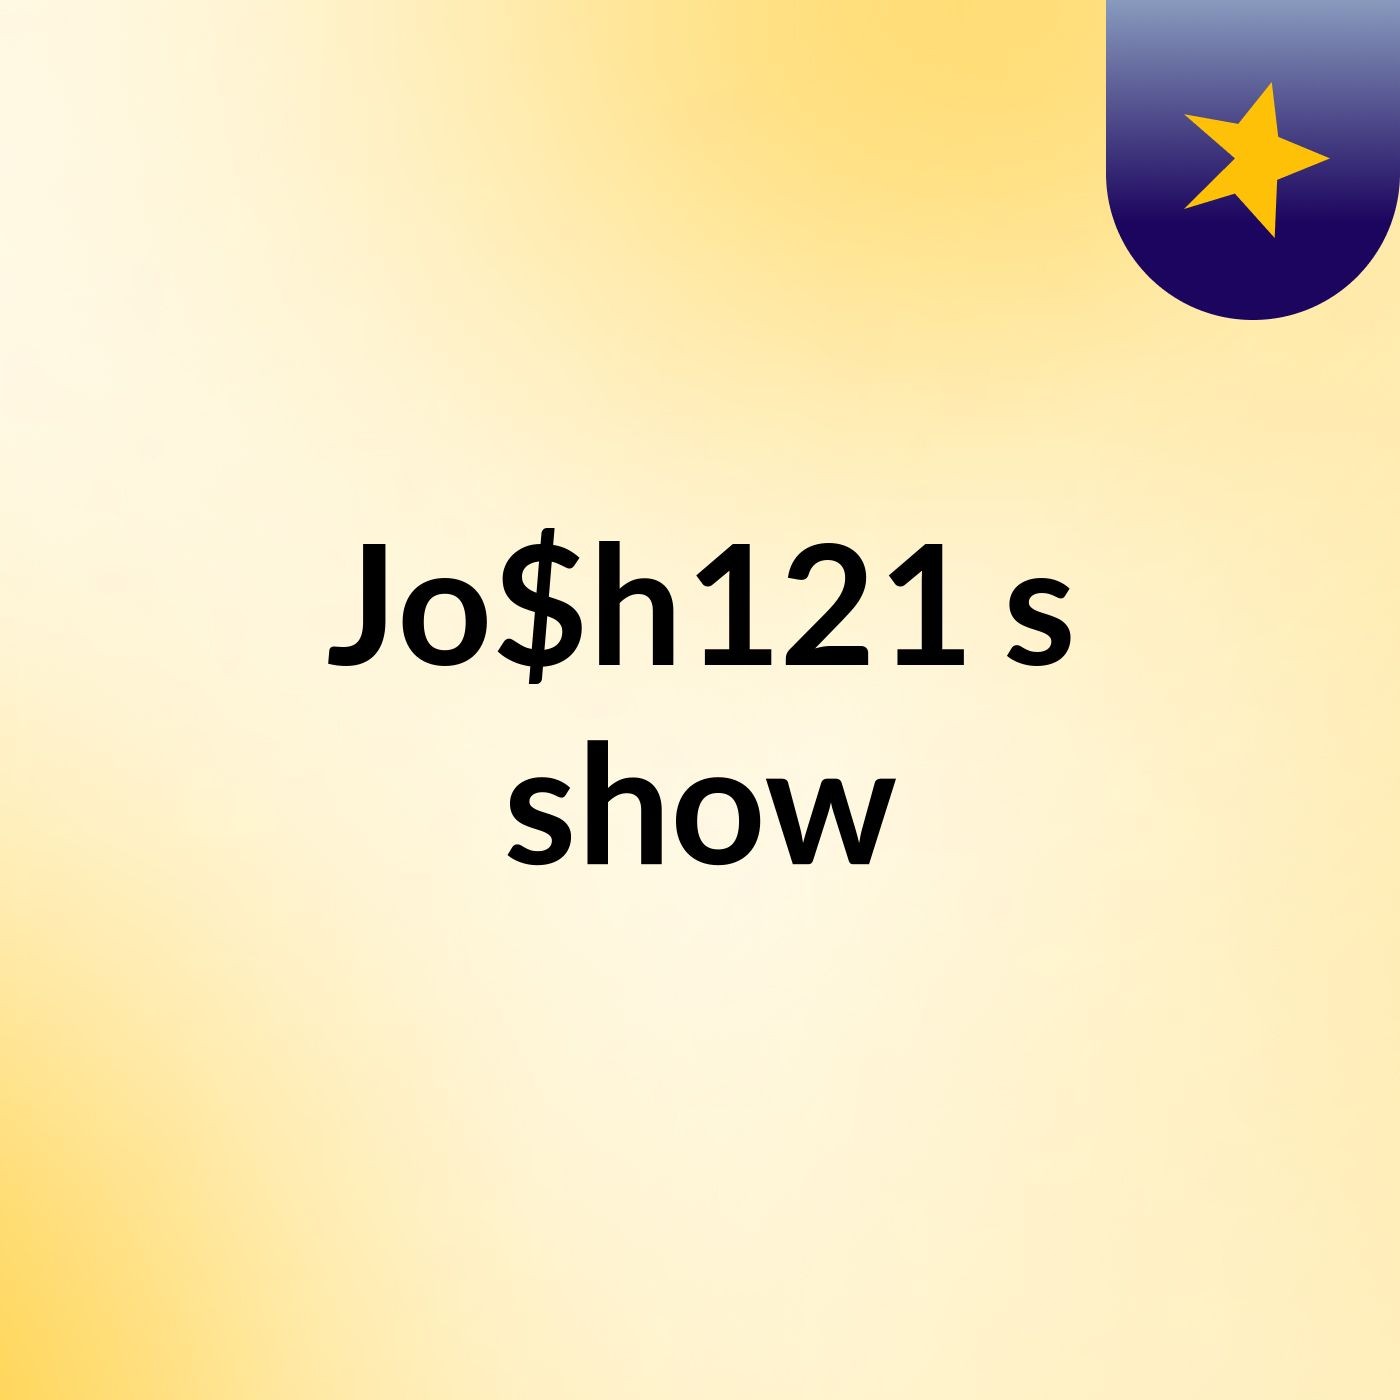 Jo$h121's show